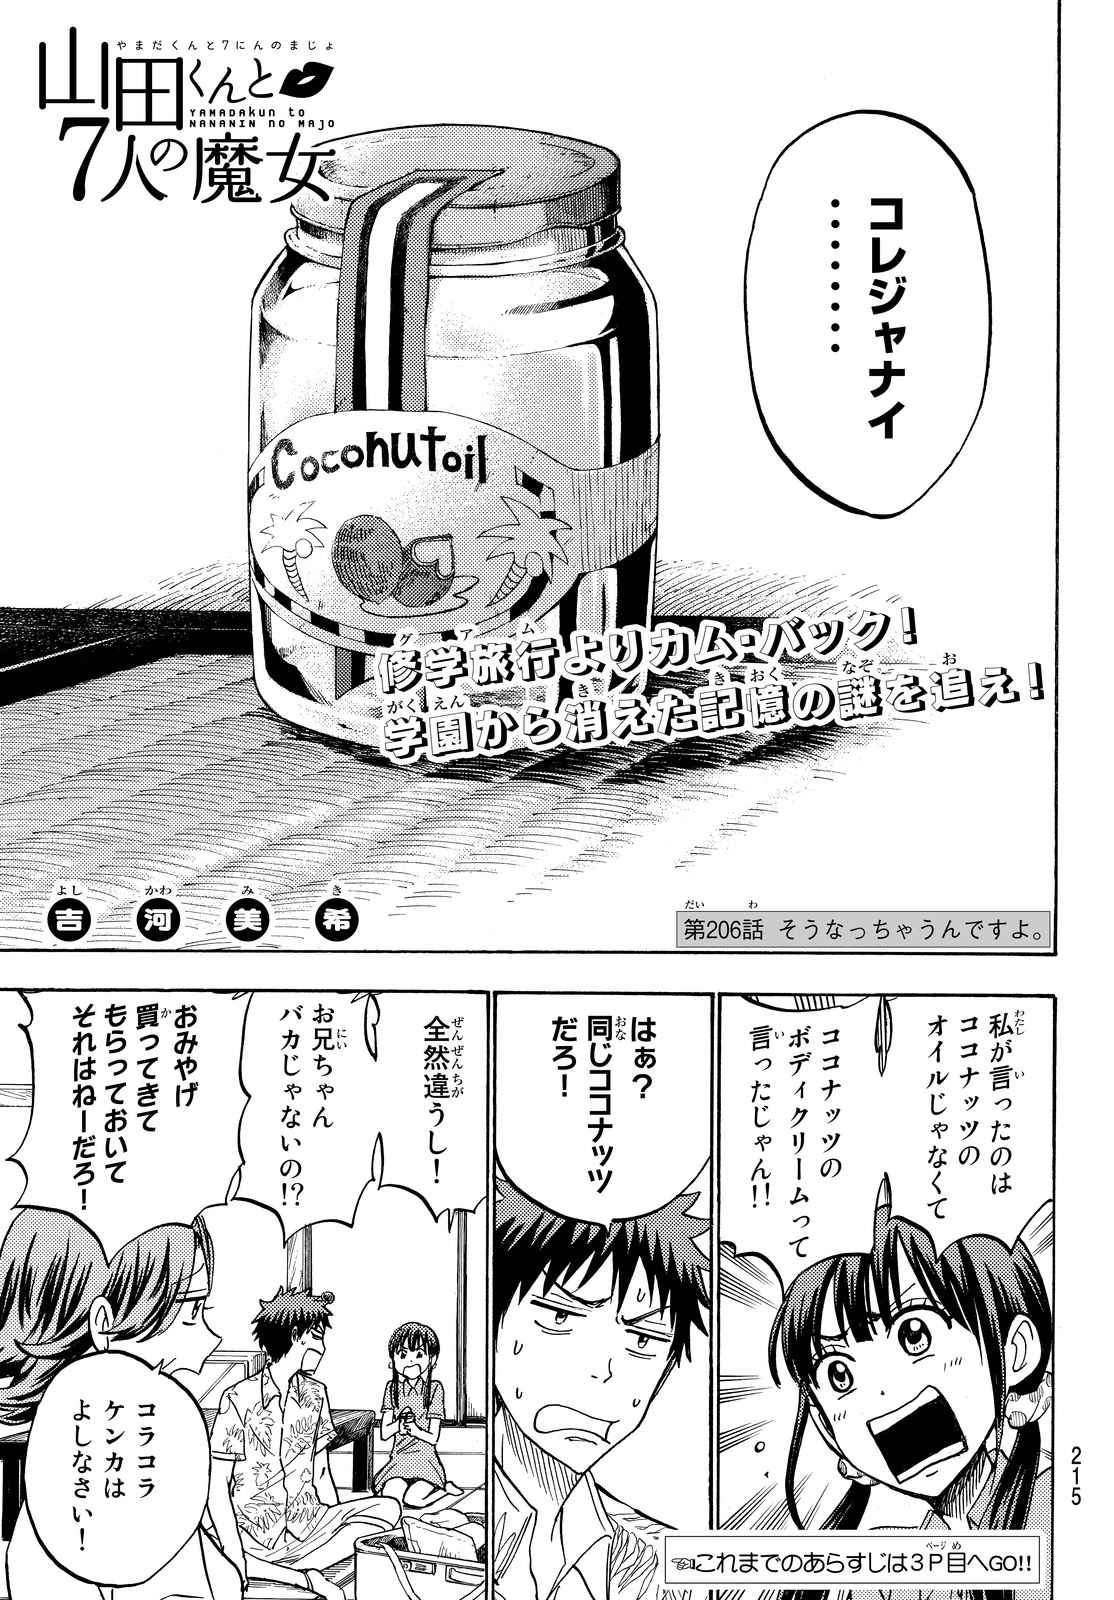 Yamada-kun to 7-nin no Majo - Chapter 206 - Page 1